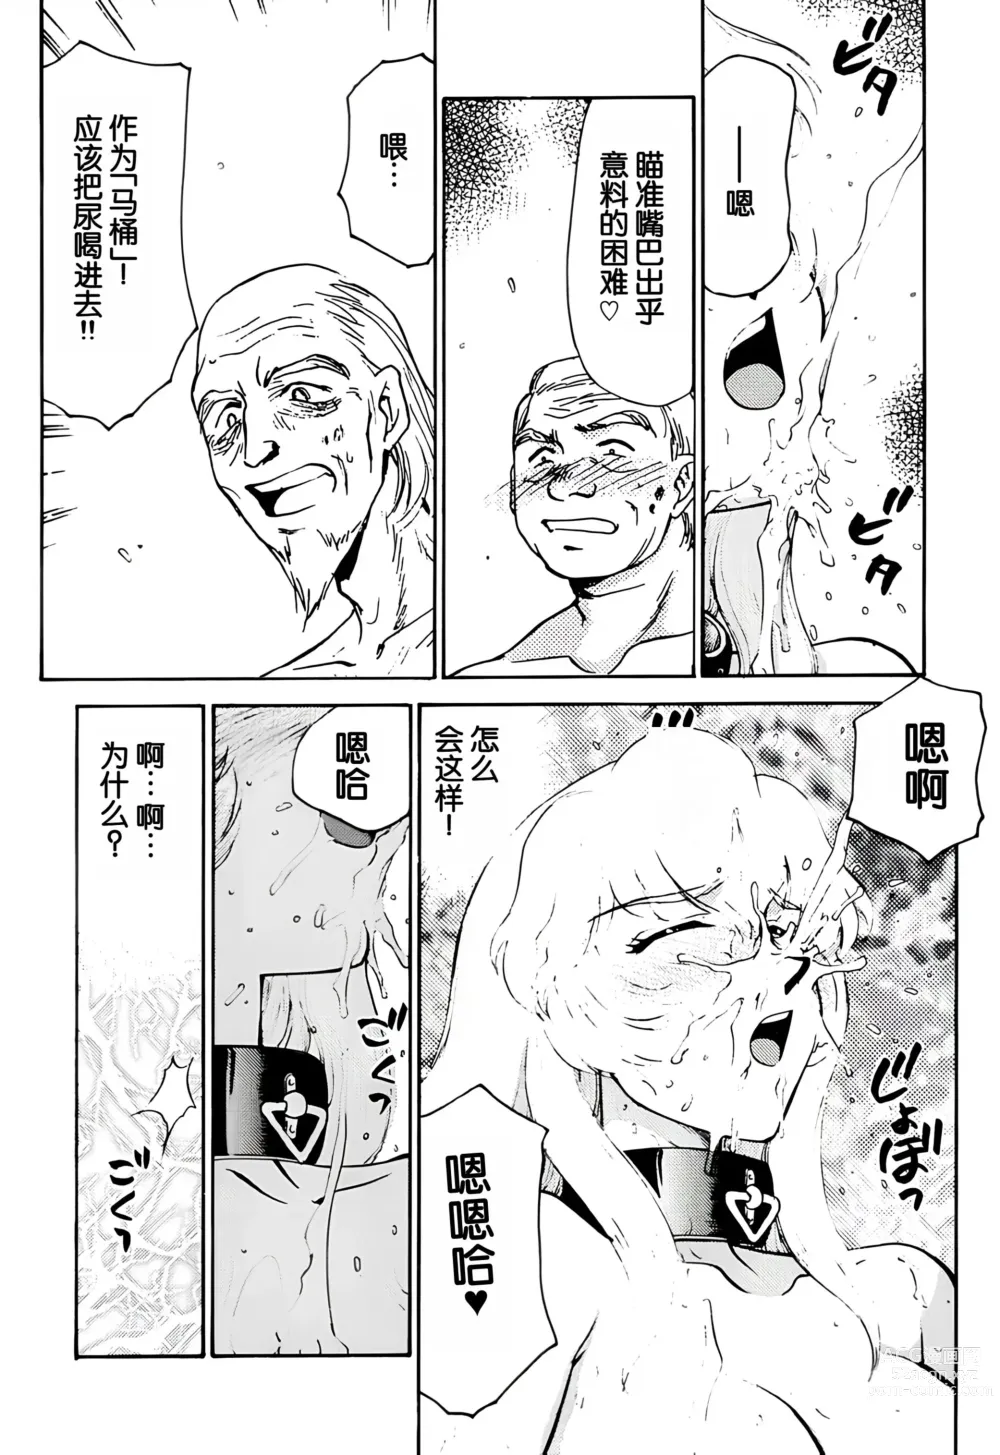 Page 84 of doujinshi Nise DRAGON BLOOD! 2.